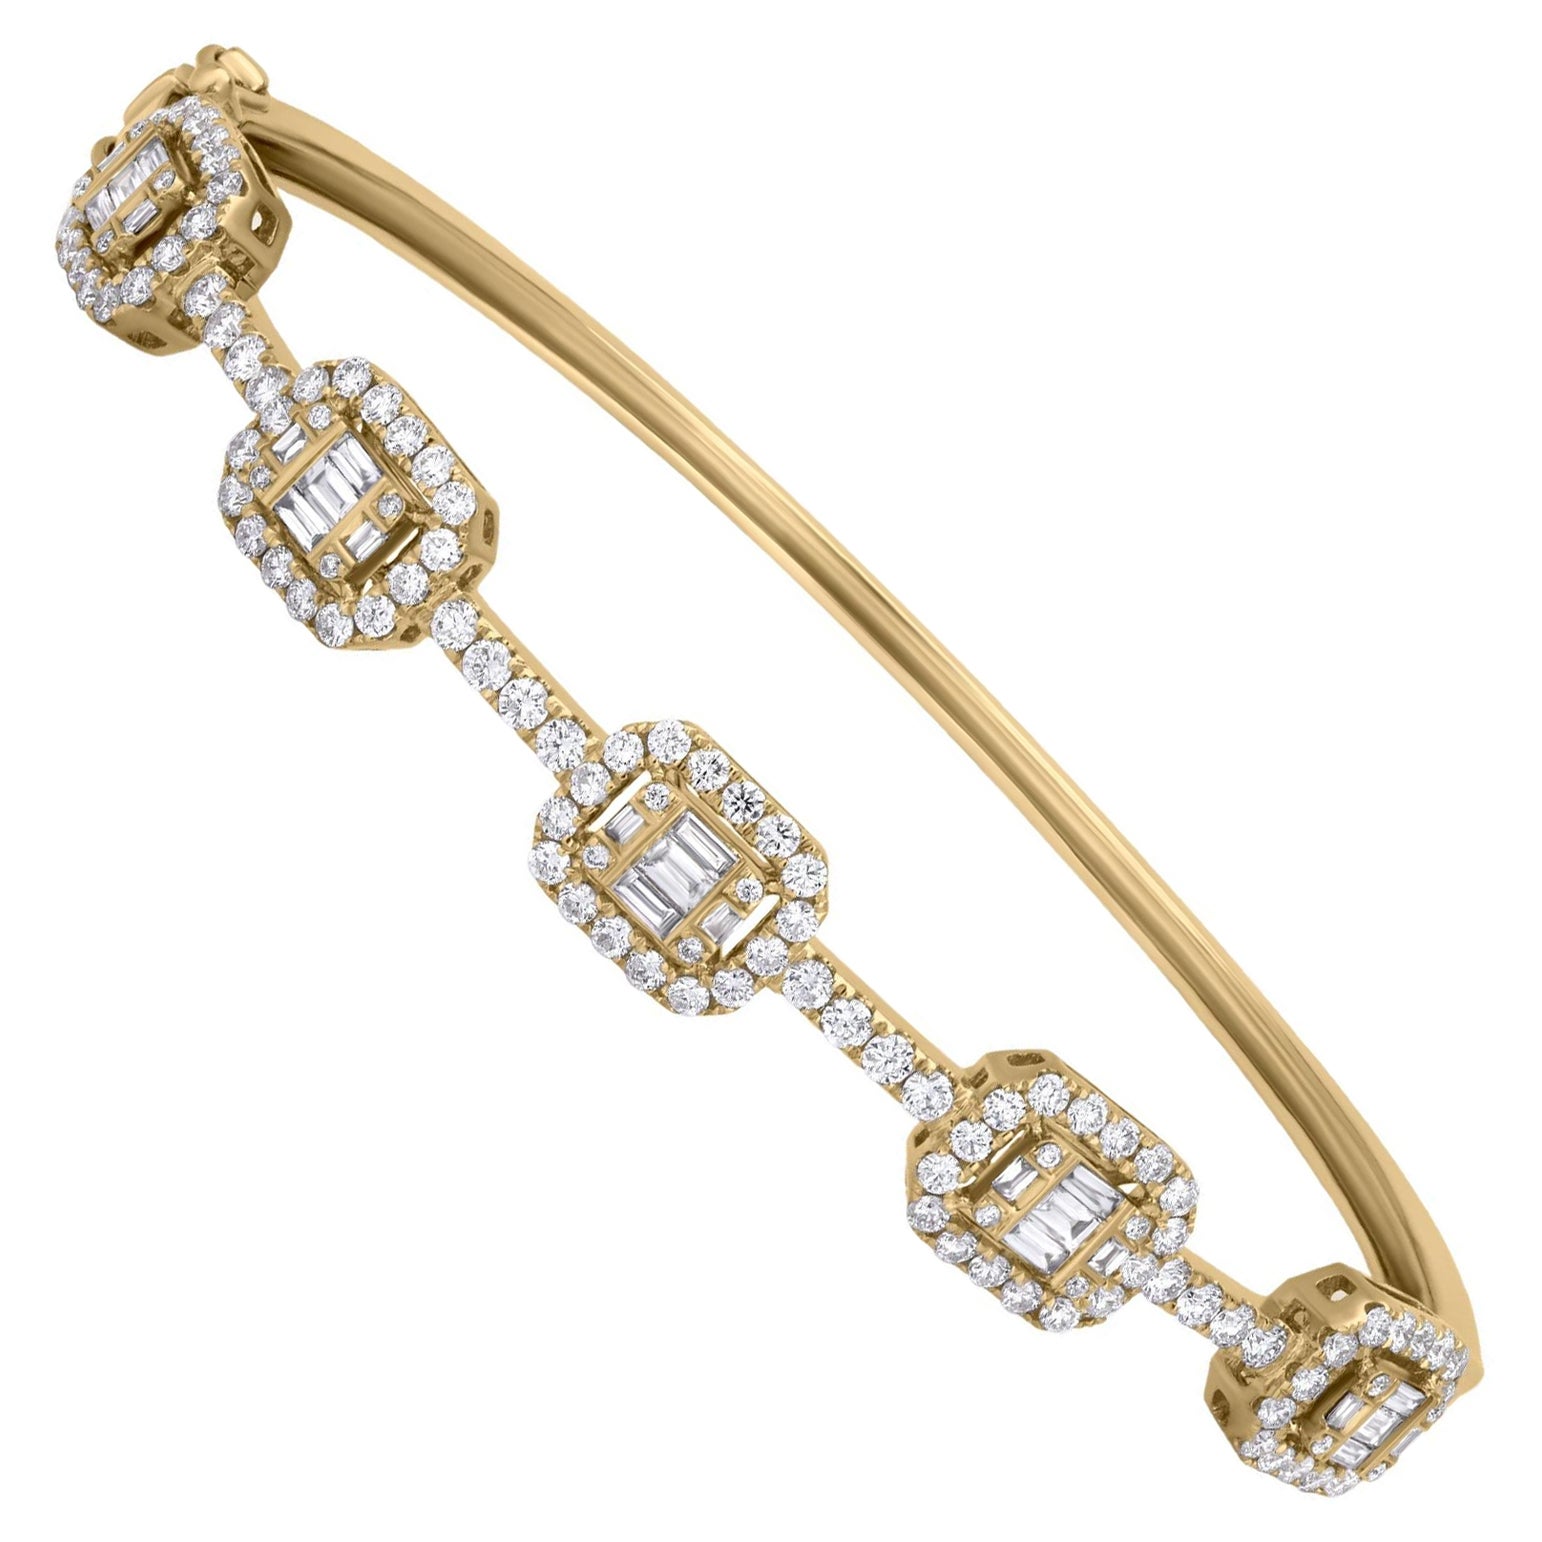 Luxle 1.48 Carat T.W. Diamond Frames Bangle Bracelet in 18k Yellow Gold